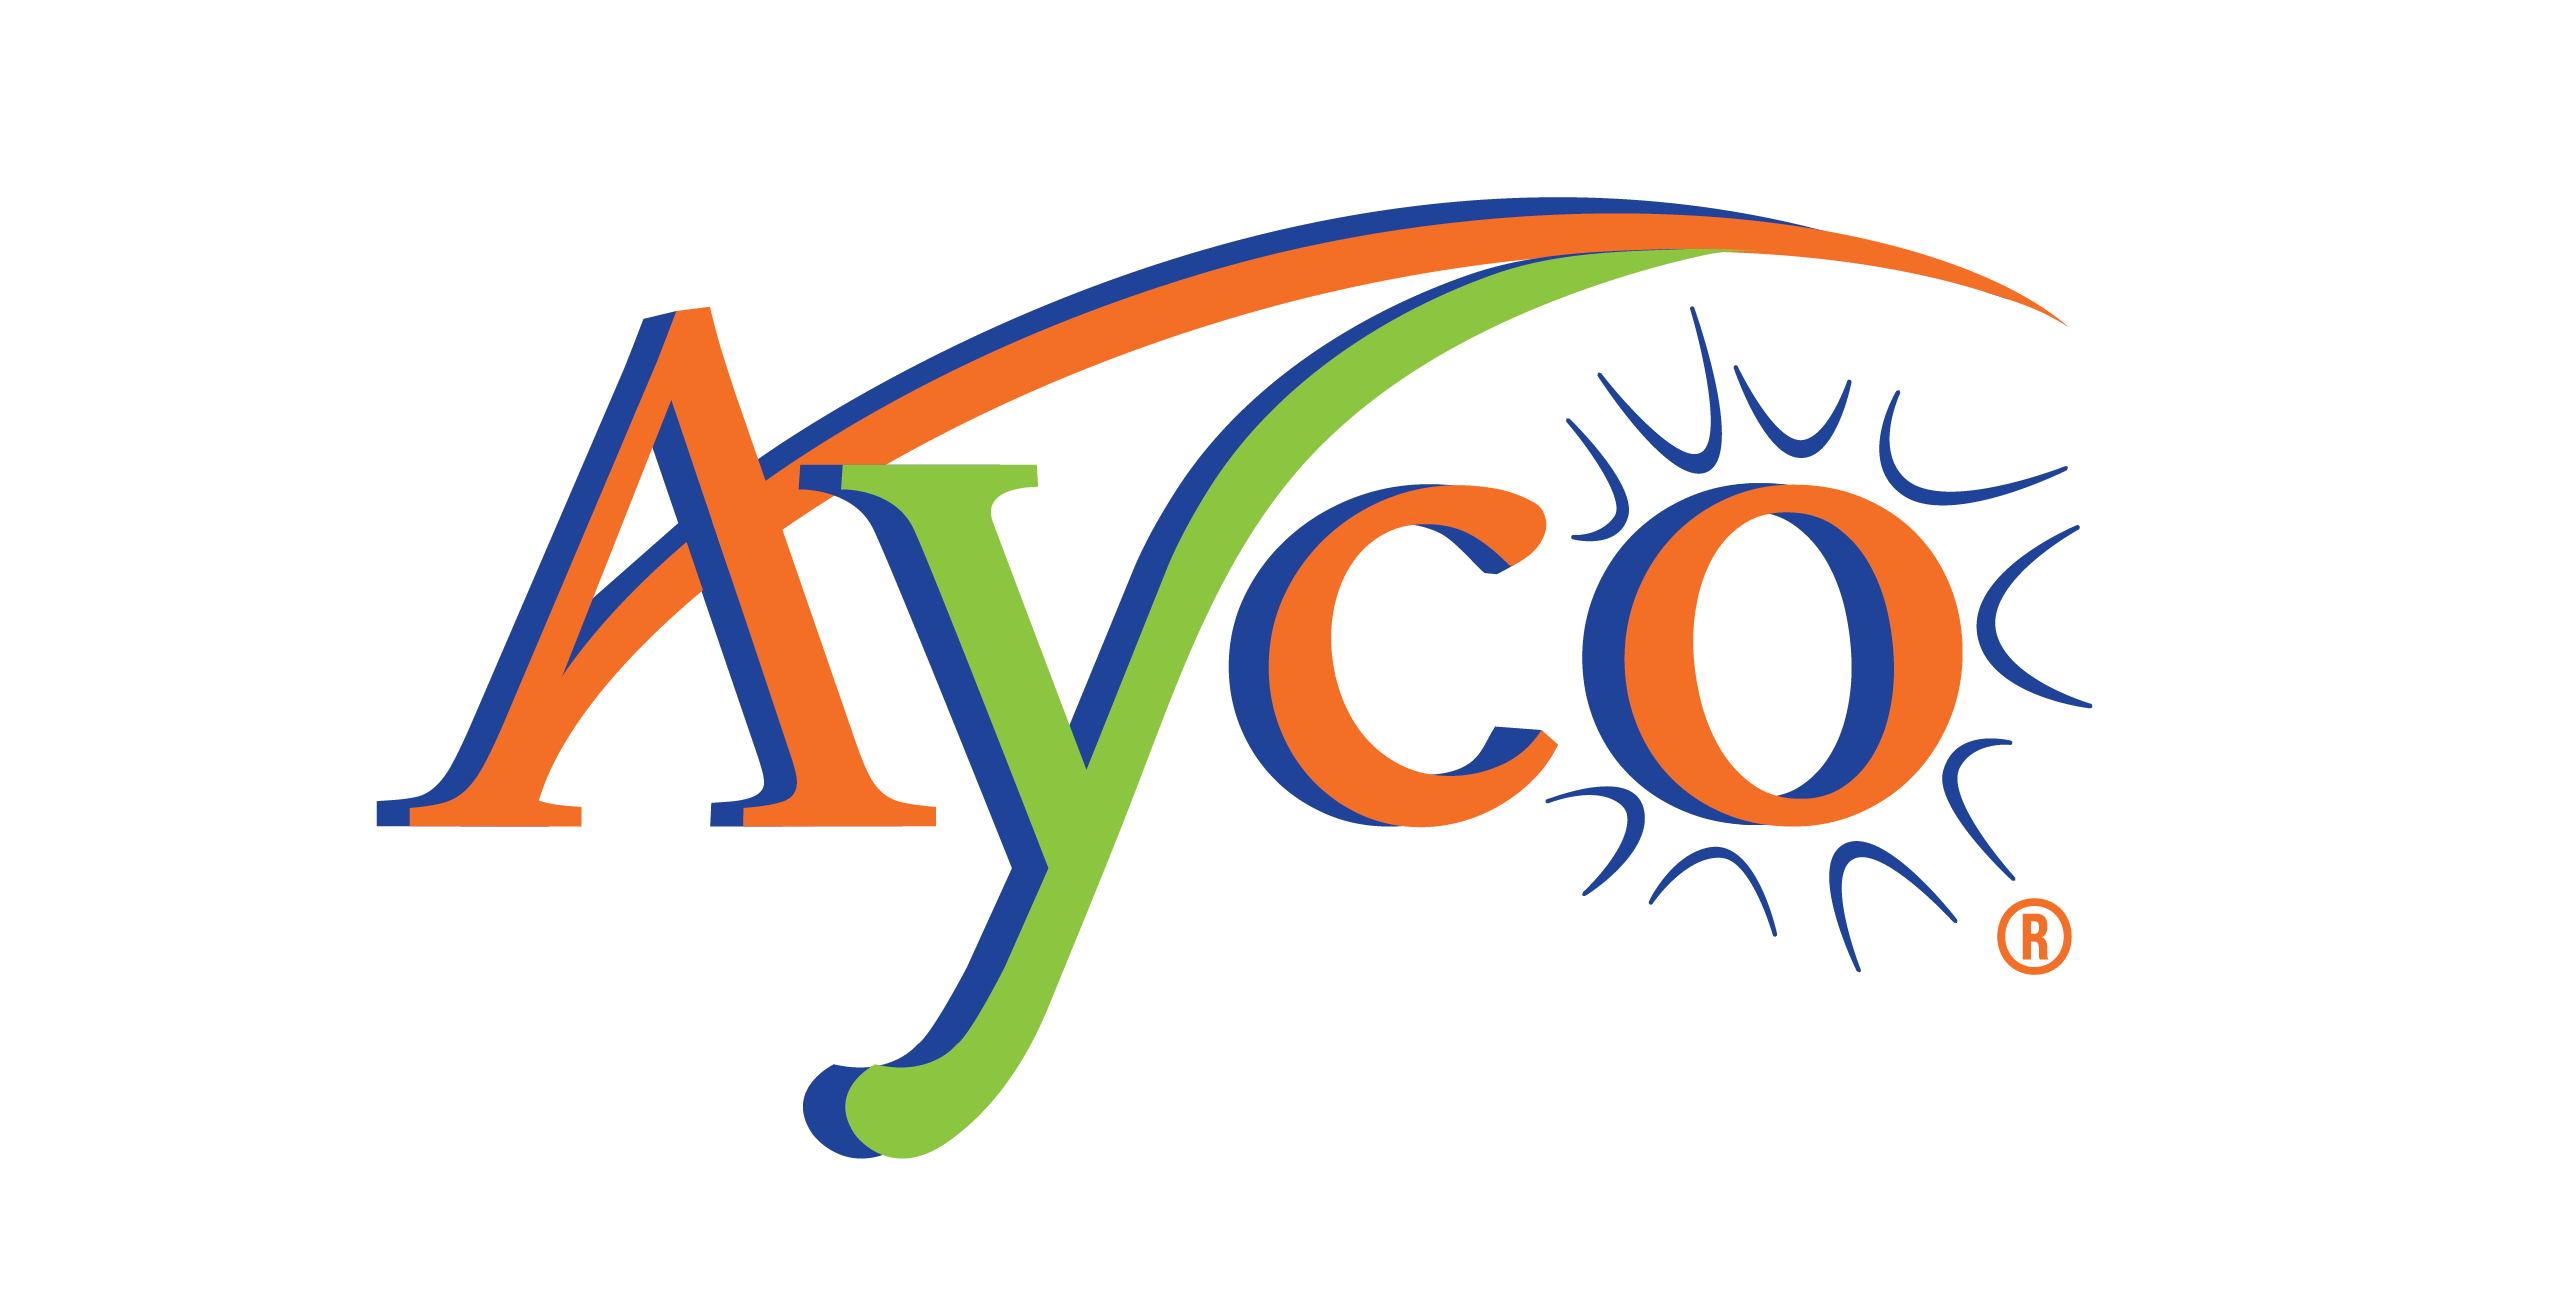 Ayco Farms - Our Farms | Your Future